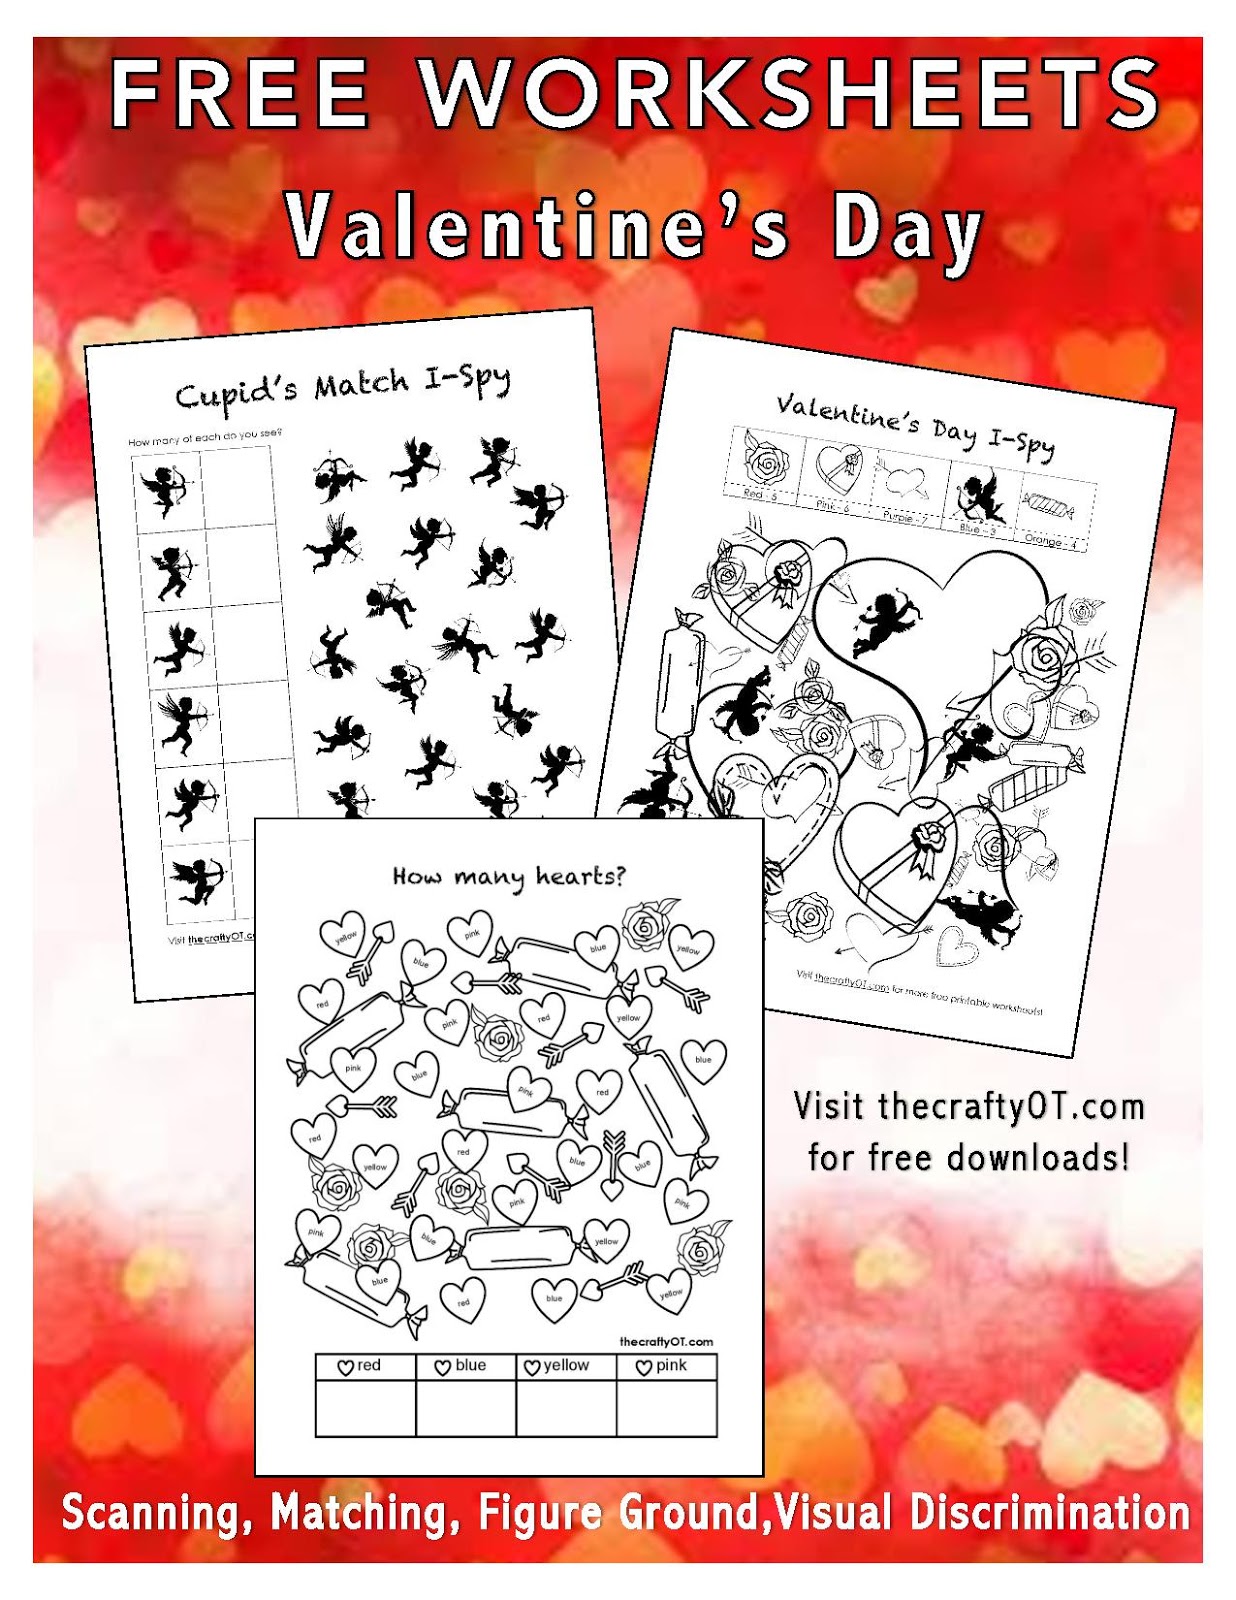 the-crafty-ot-free-valentine-s-day-worksheets